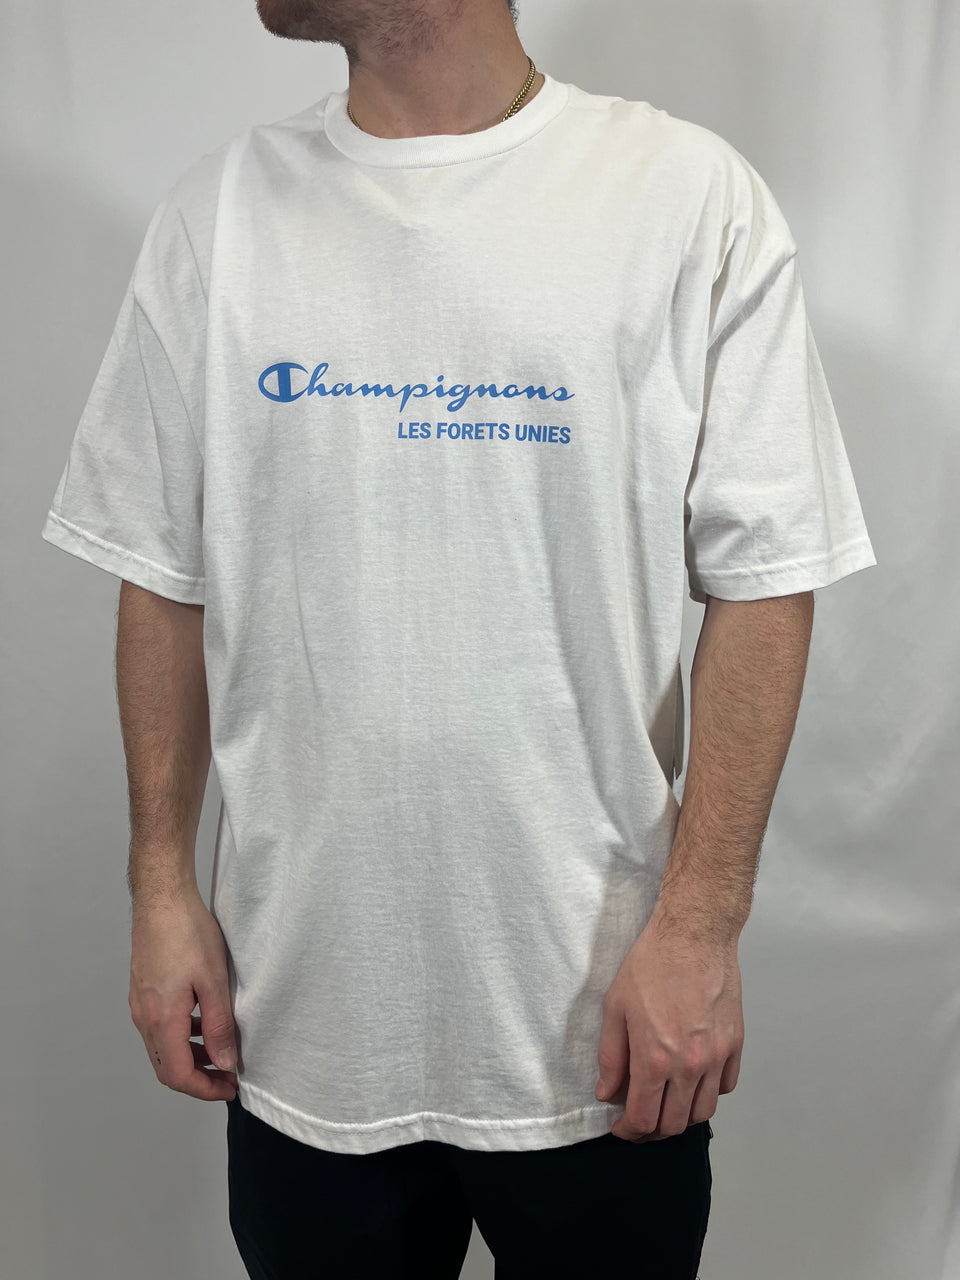 ERRATUM Champignons t-shirt en blanc